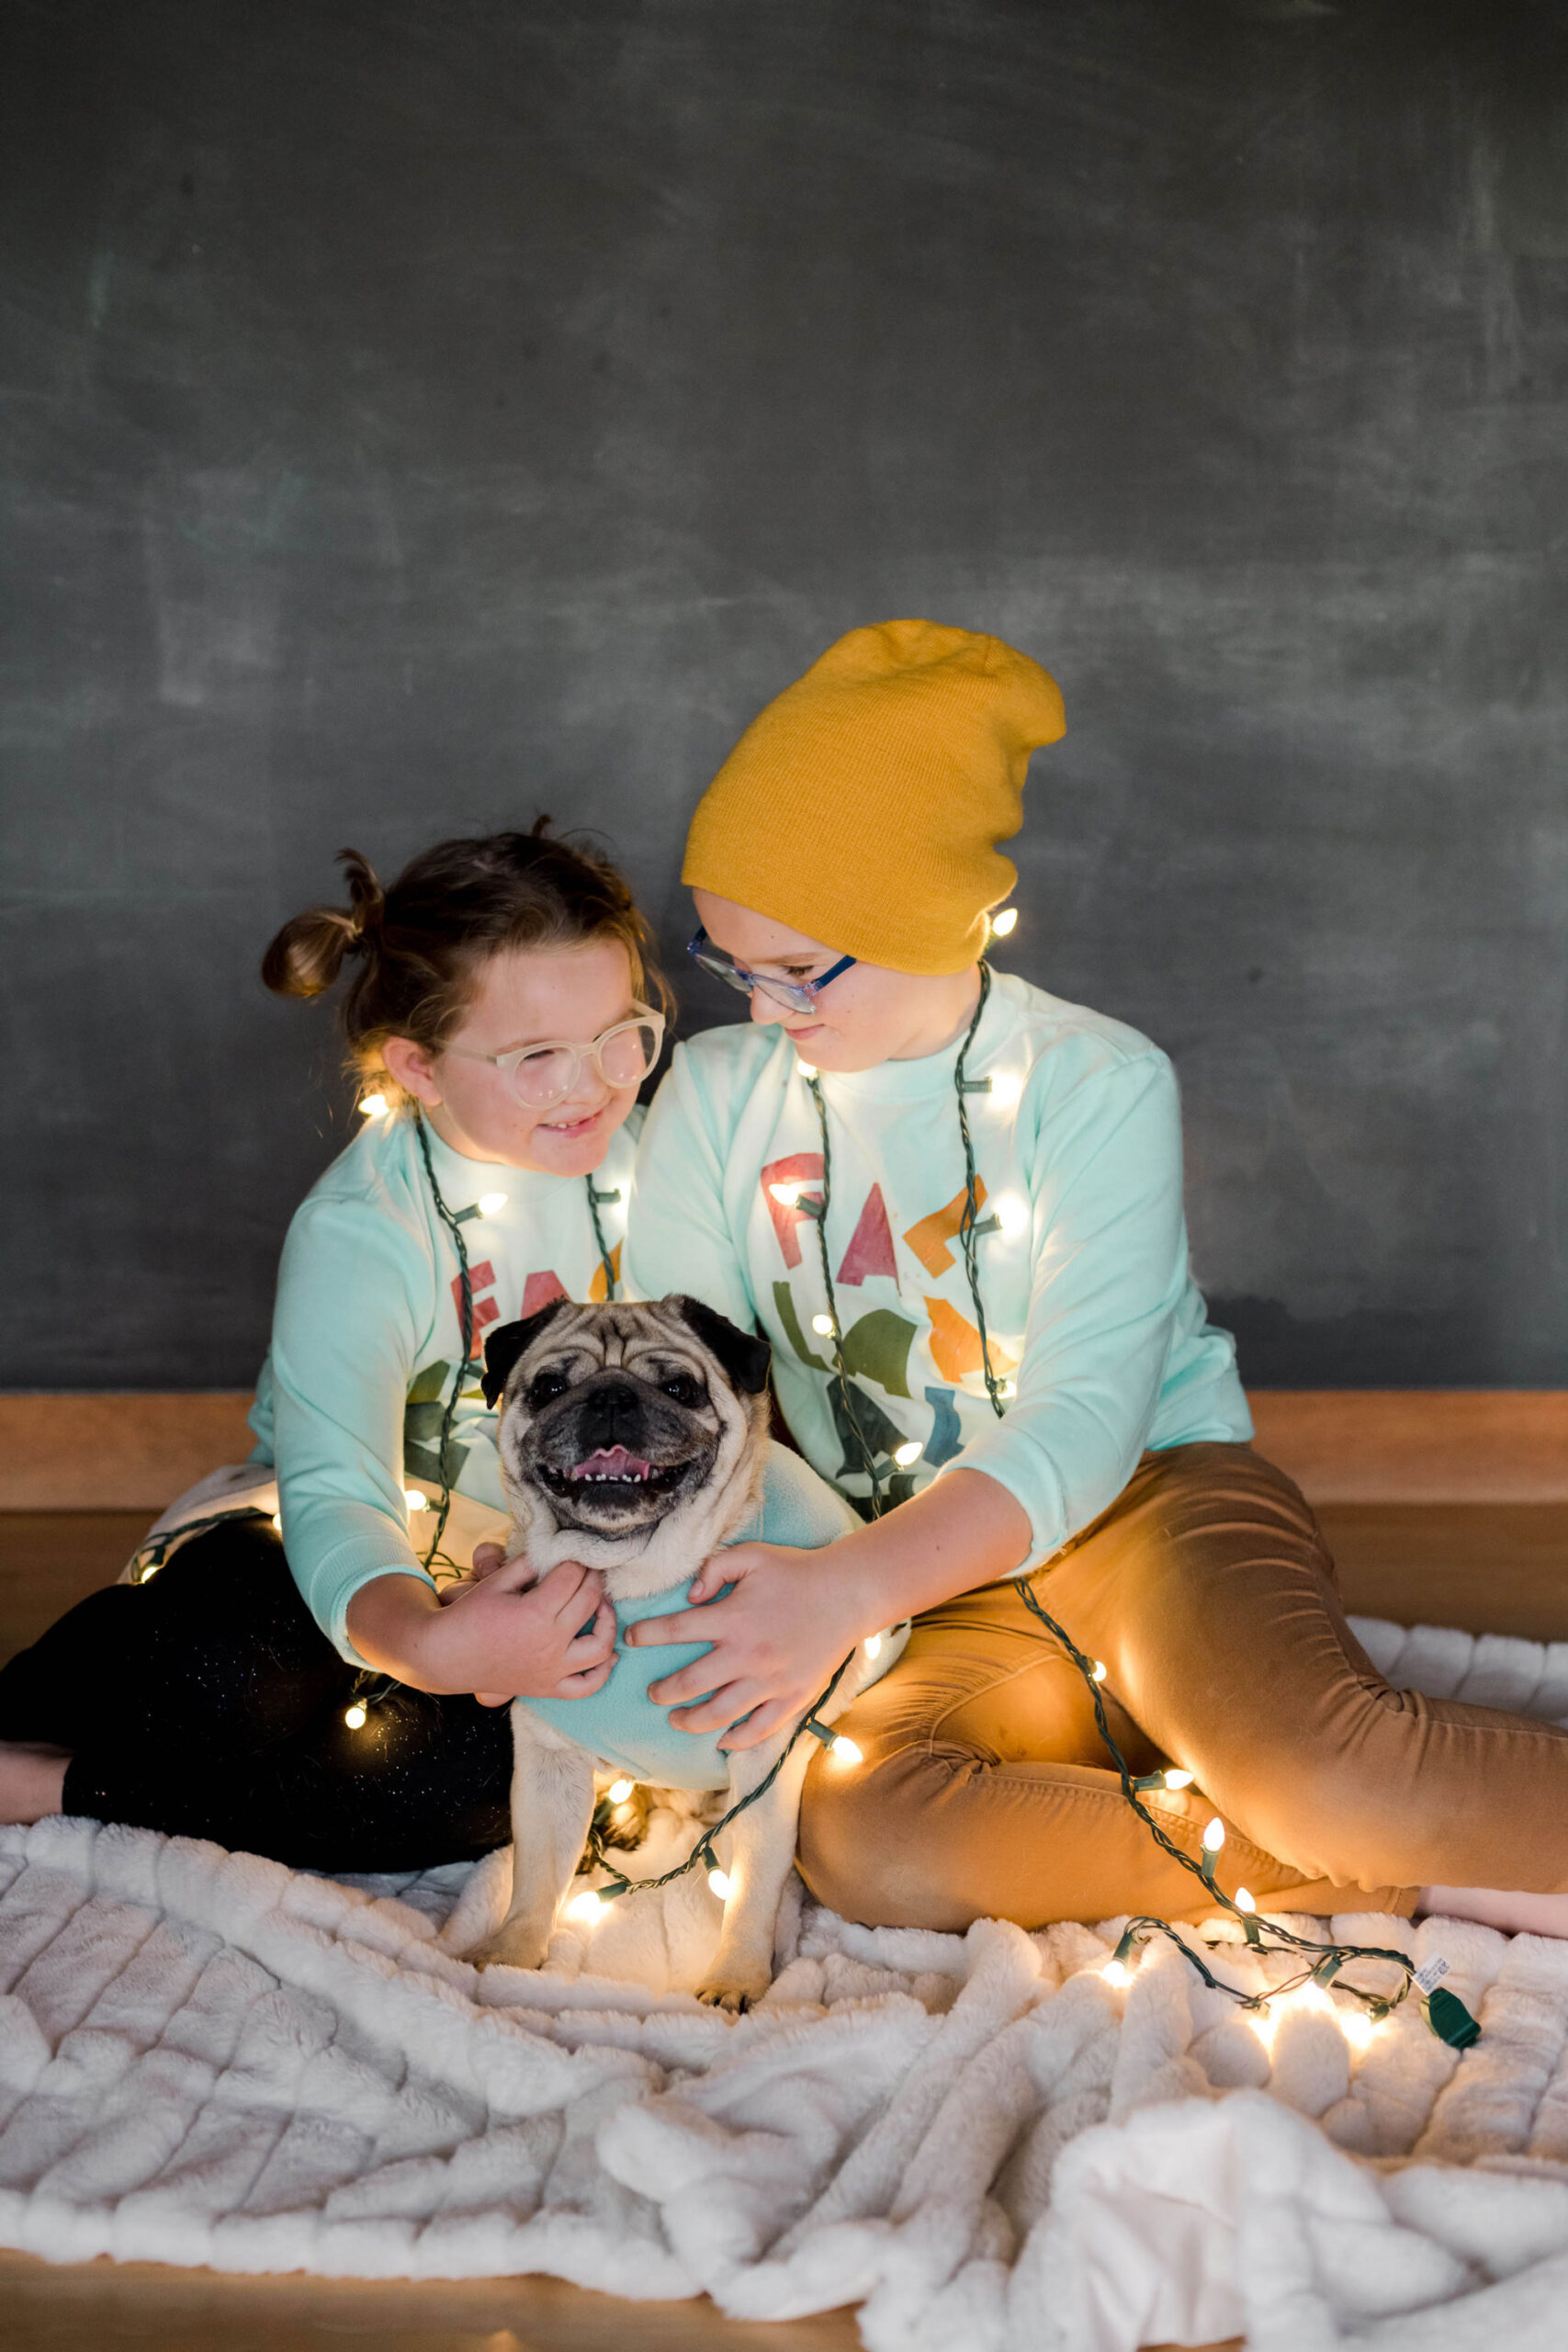 matching holiday sweatshirt tutorial, painted holiday sweatshirts, fabric paint shirts, matching family shirt idea, matching family shirt DIY